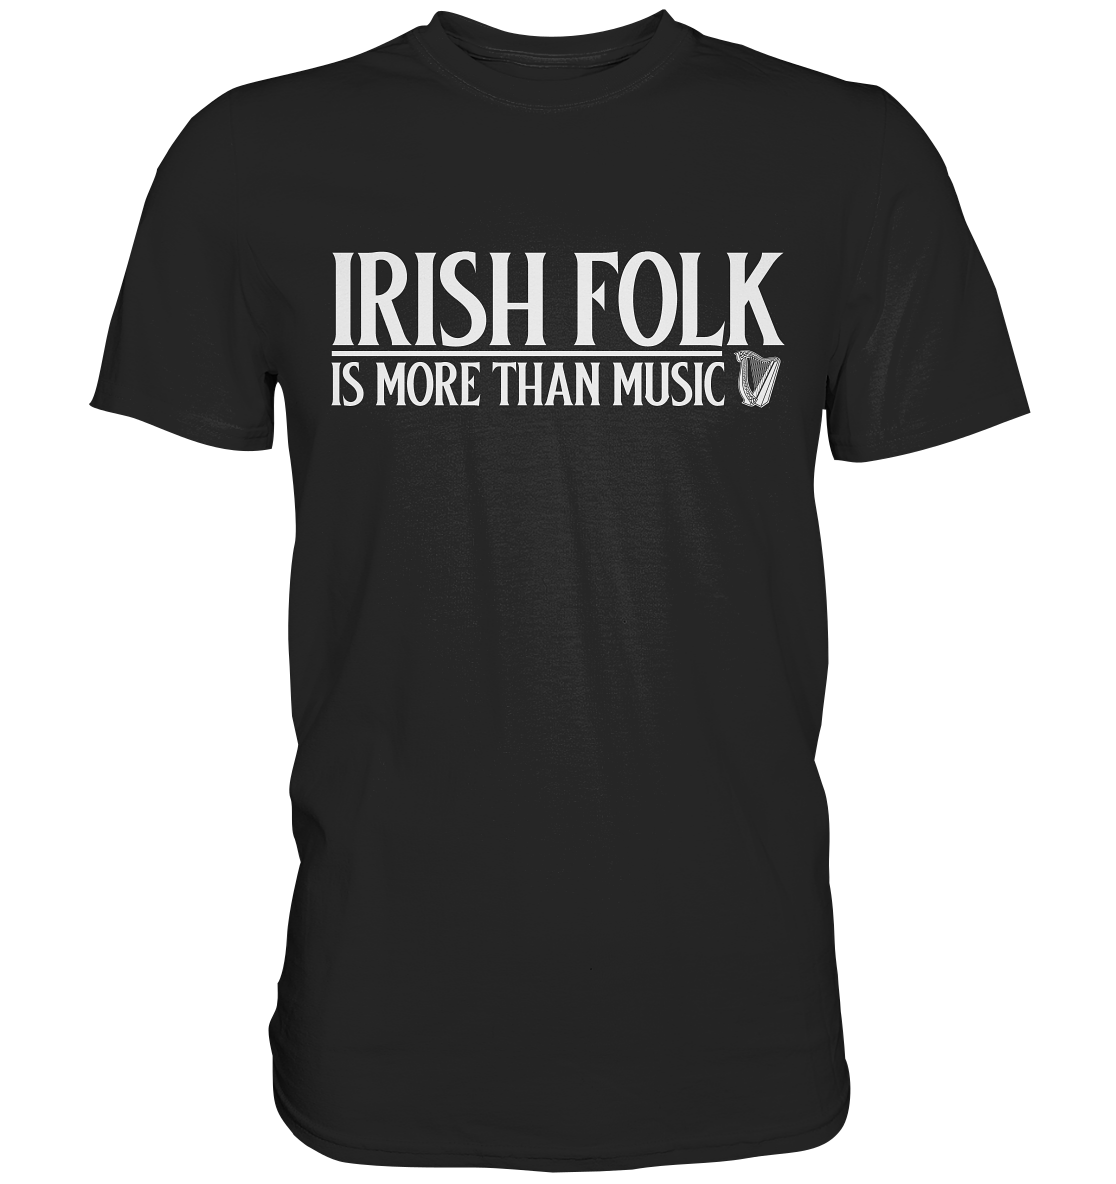 Irish Folk "Is More Than Music" - Premium Shirt